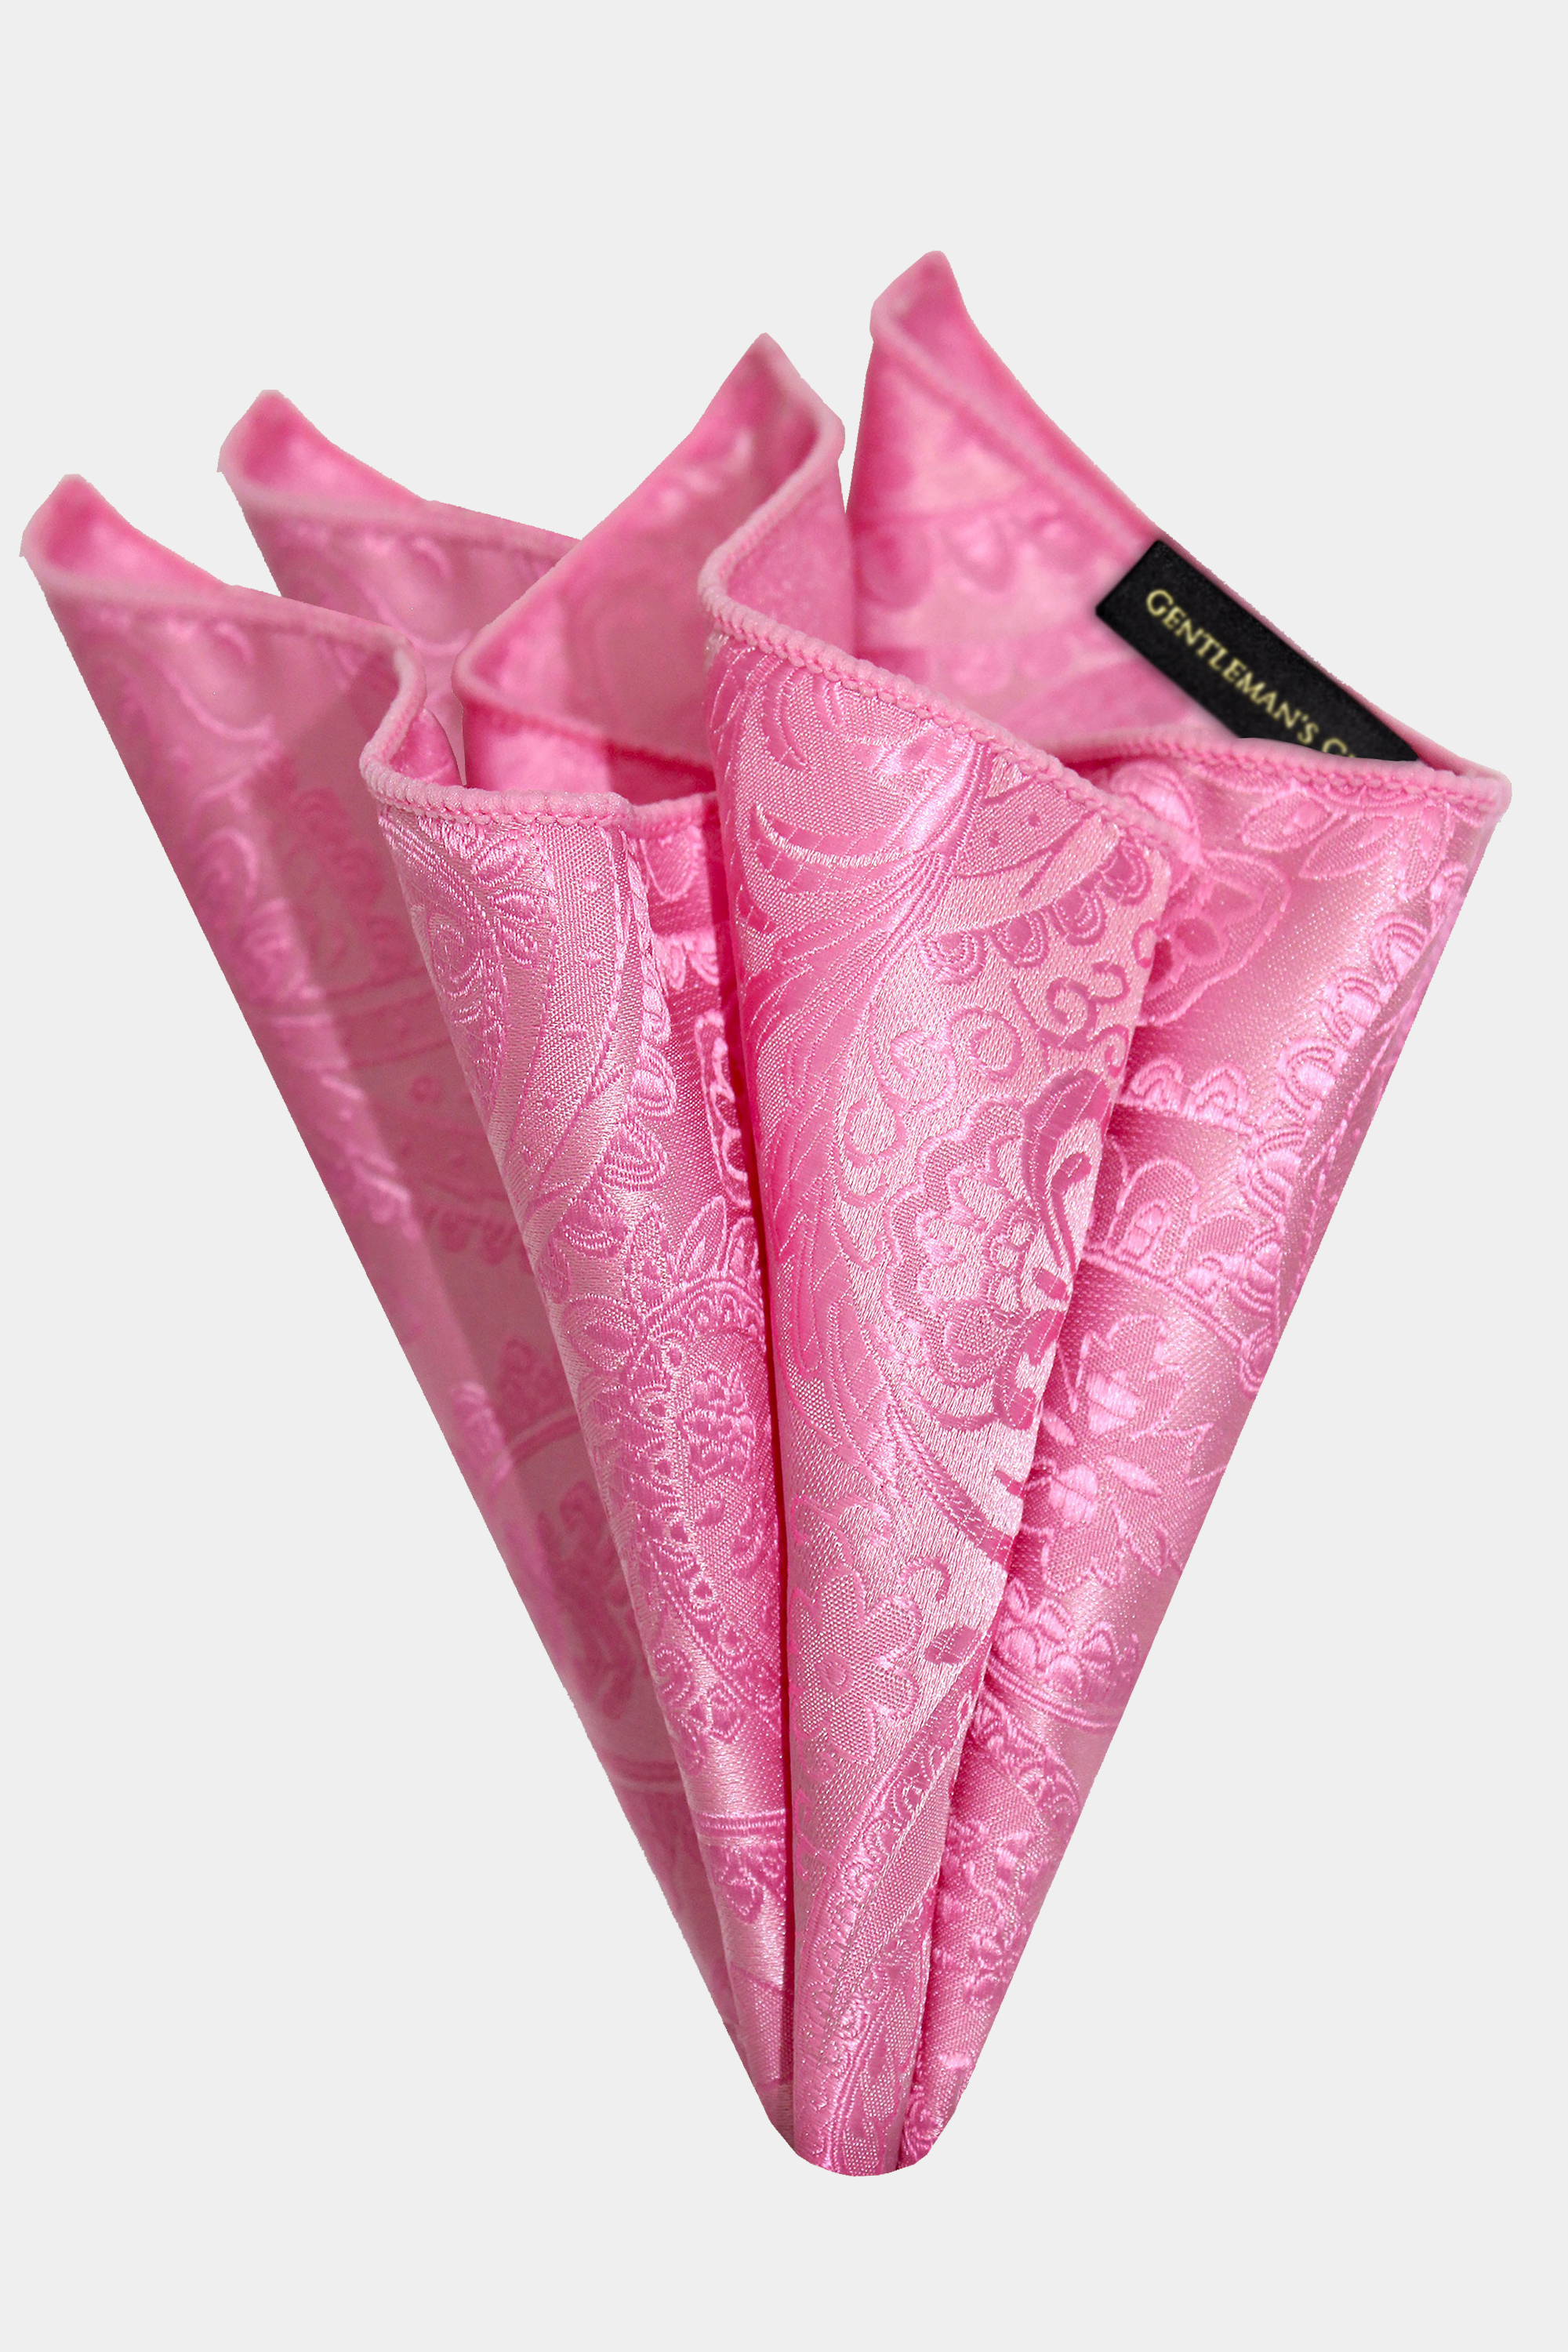 Light-Pink-Paisley-Pocket-Square-Handkerchief-from-Gentlemansguru.com_